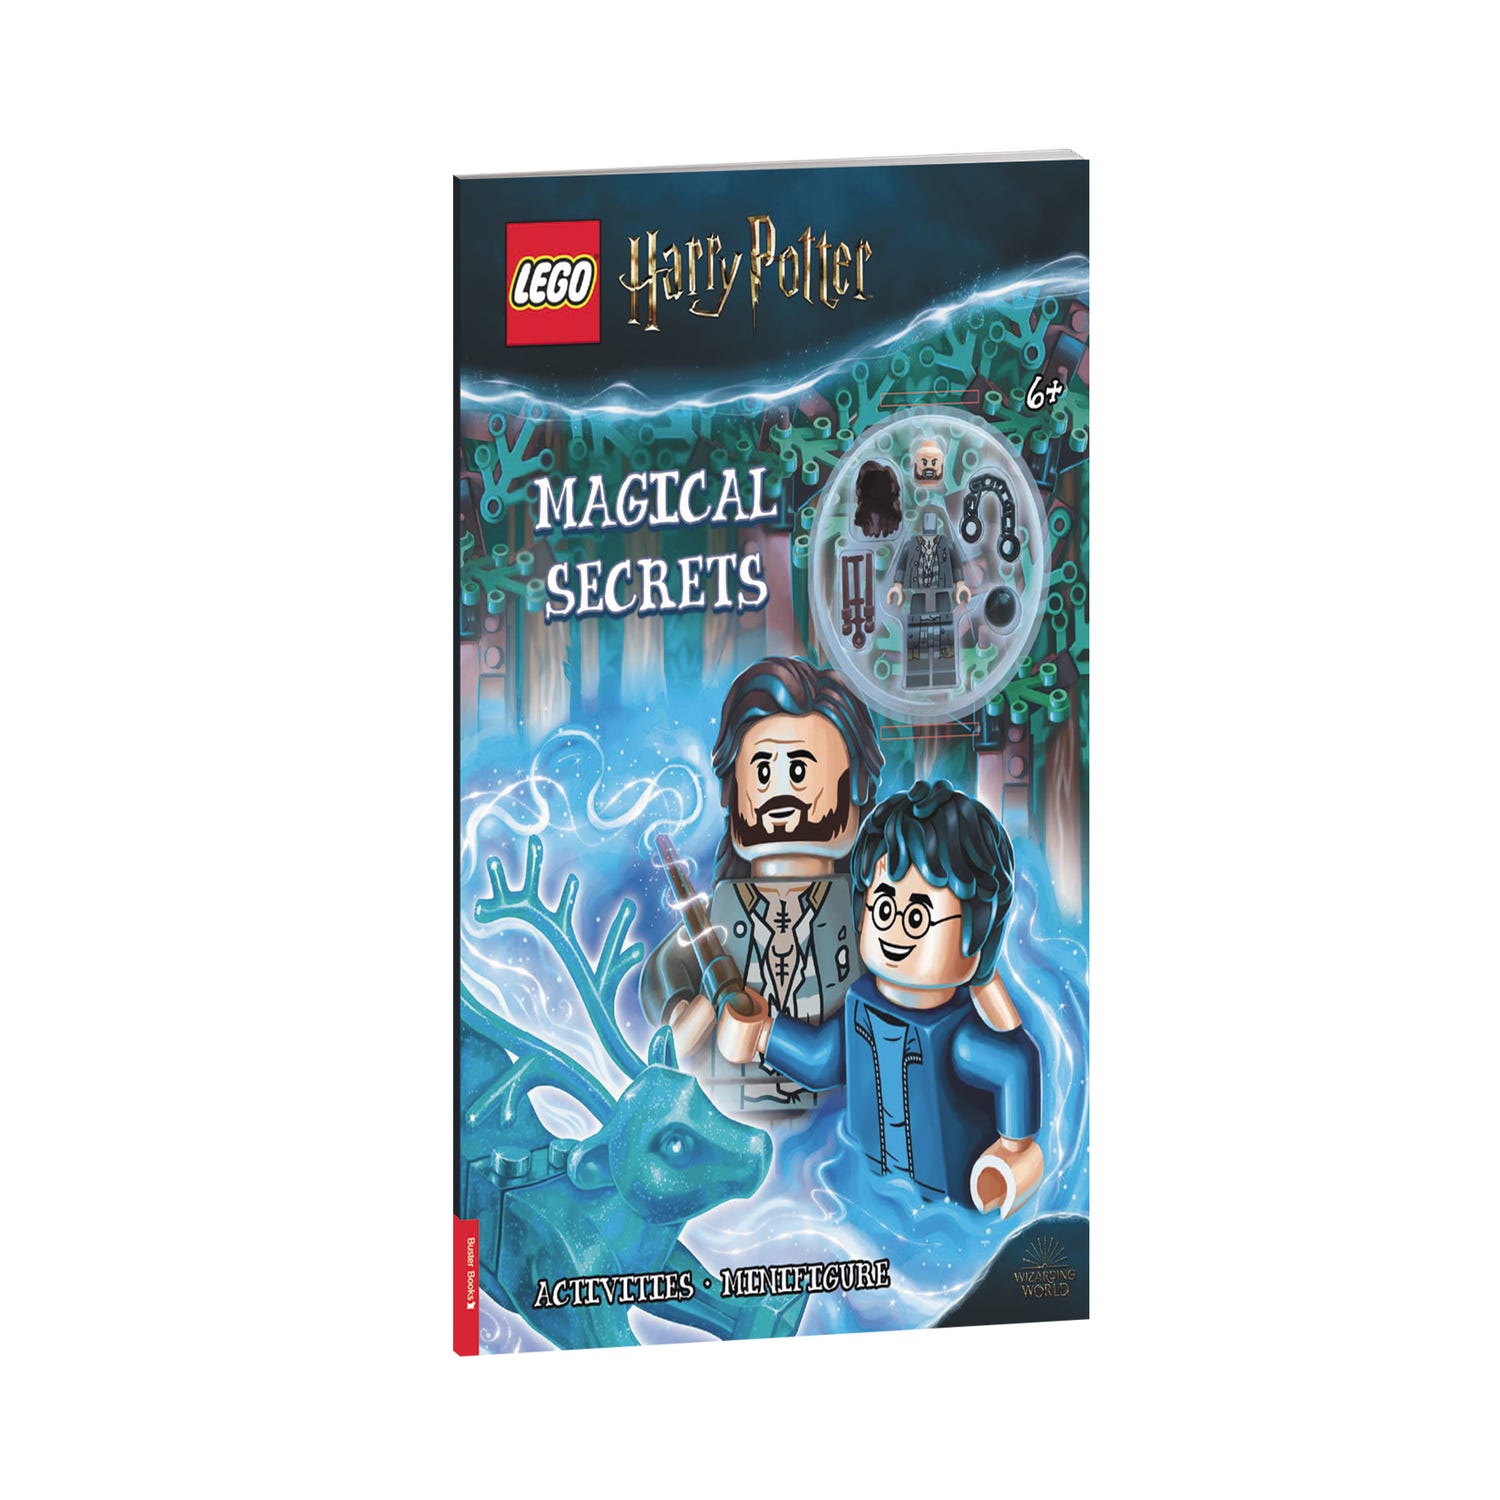 Harry Potter™: Magical Secrets 5007367, Harry Potter™